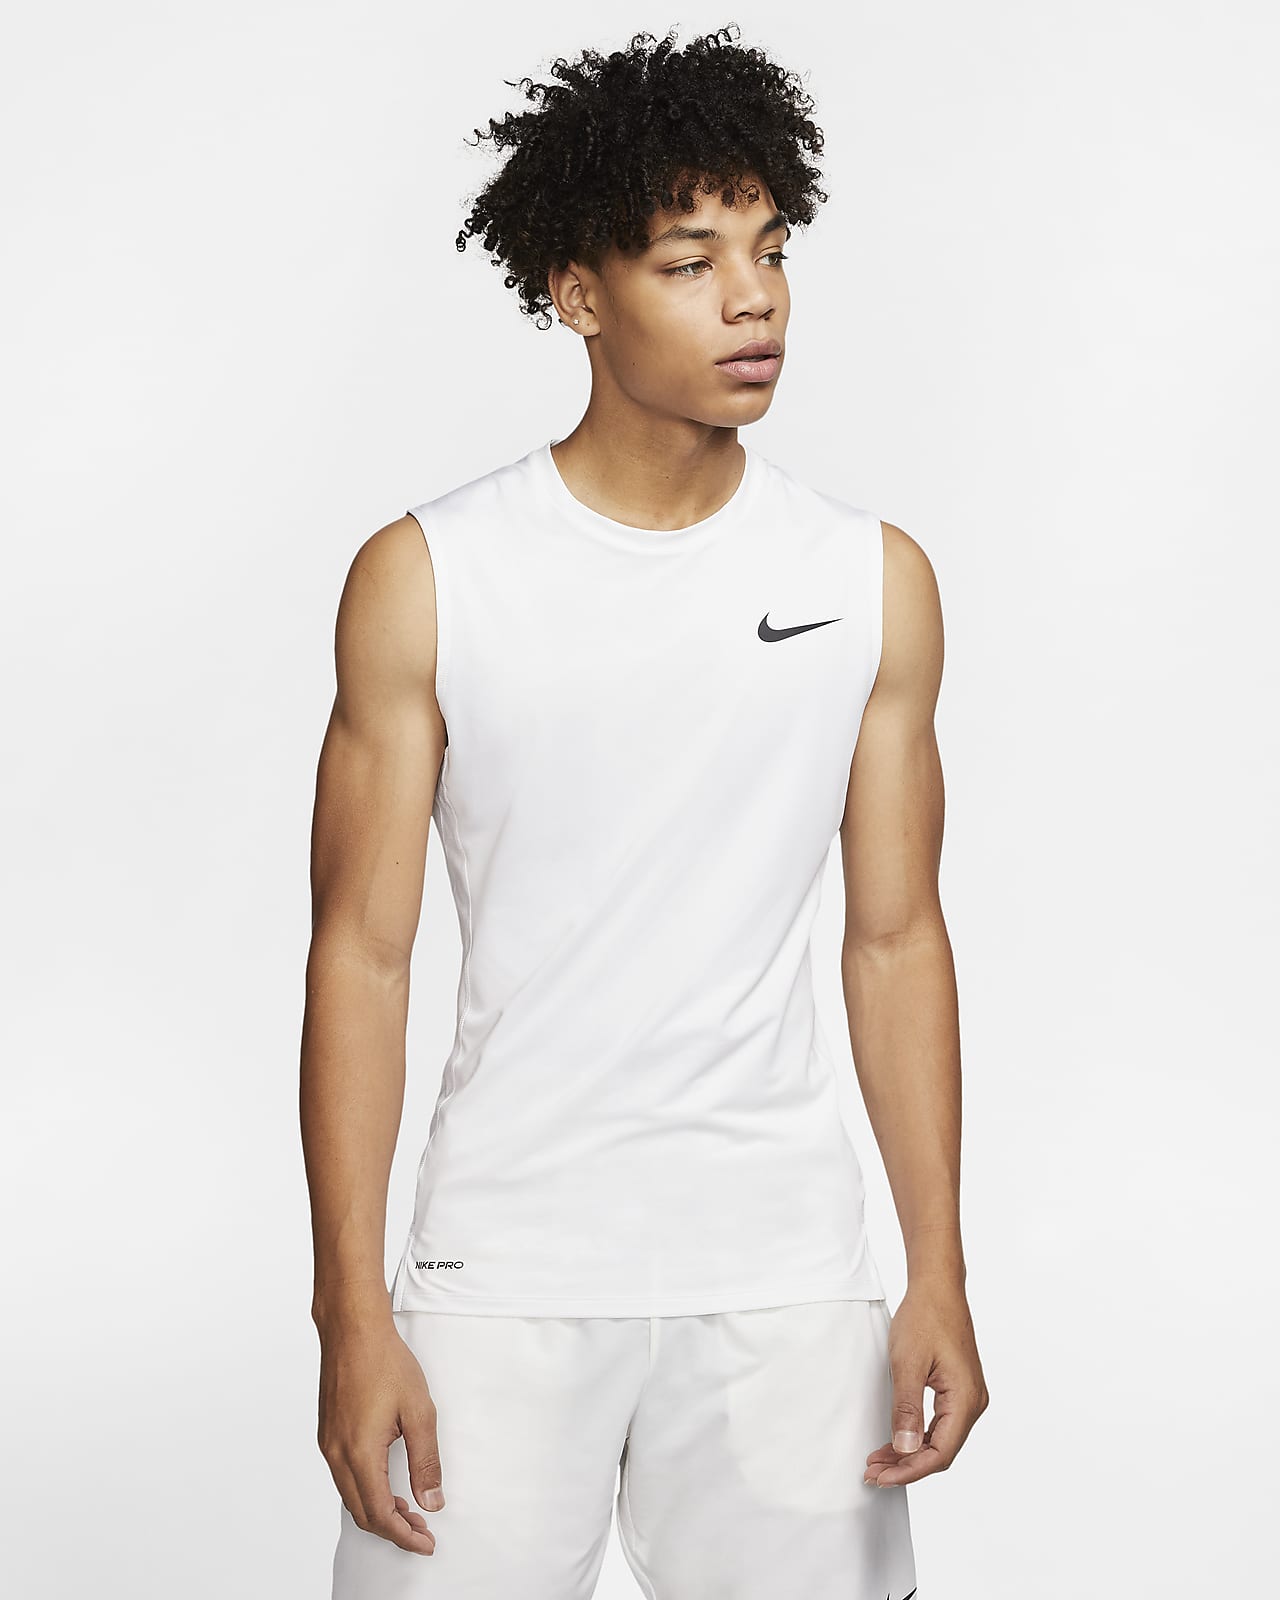 Nike Pro Men's Sleeveless Top. Nike LU